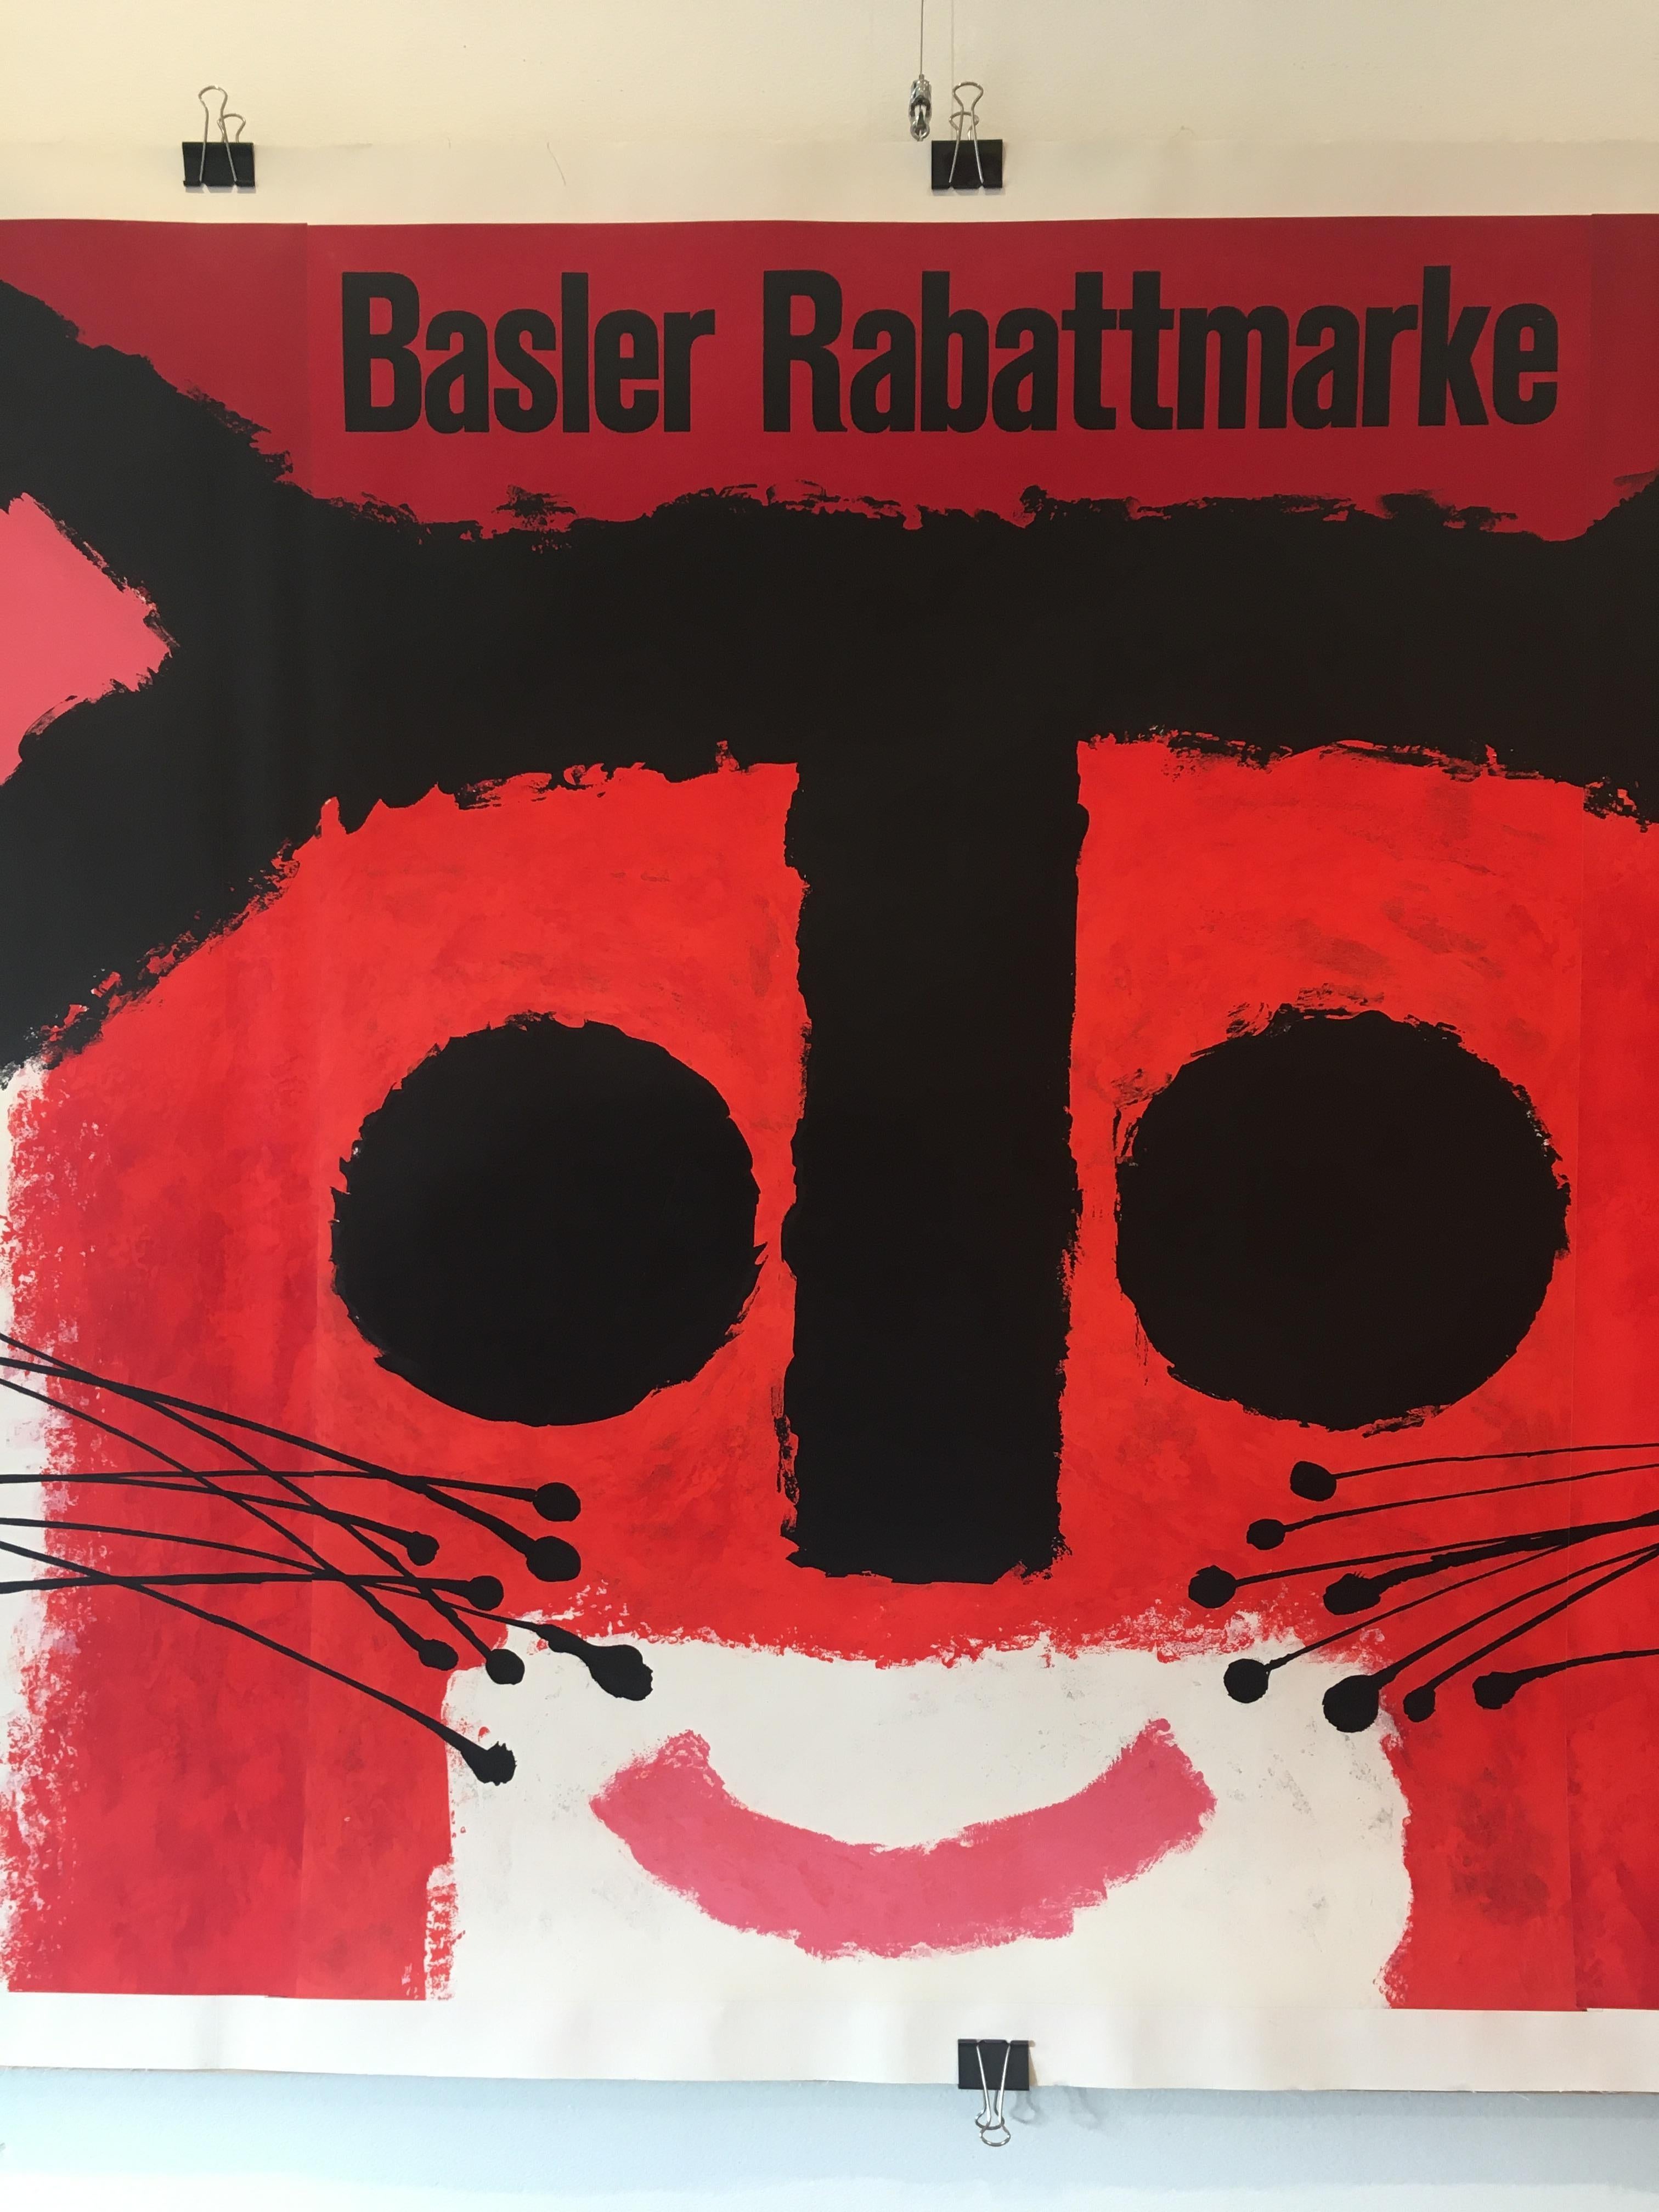 French Original Vintage Advertising Poster by Swiss Artist Piatti 'Basler Rabattmarke' For Sale